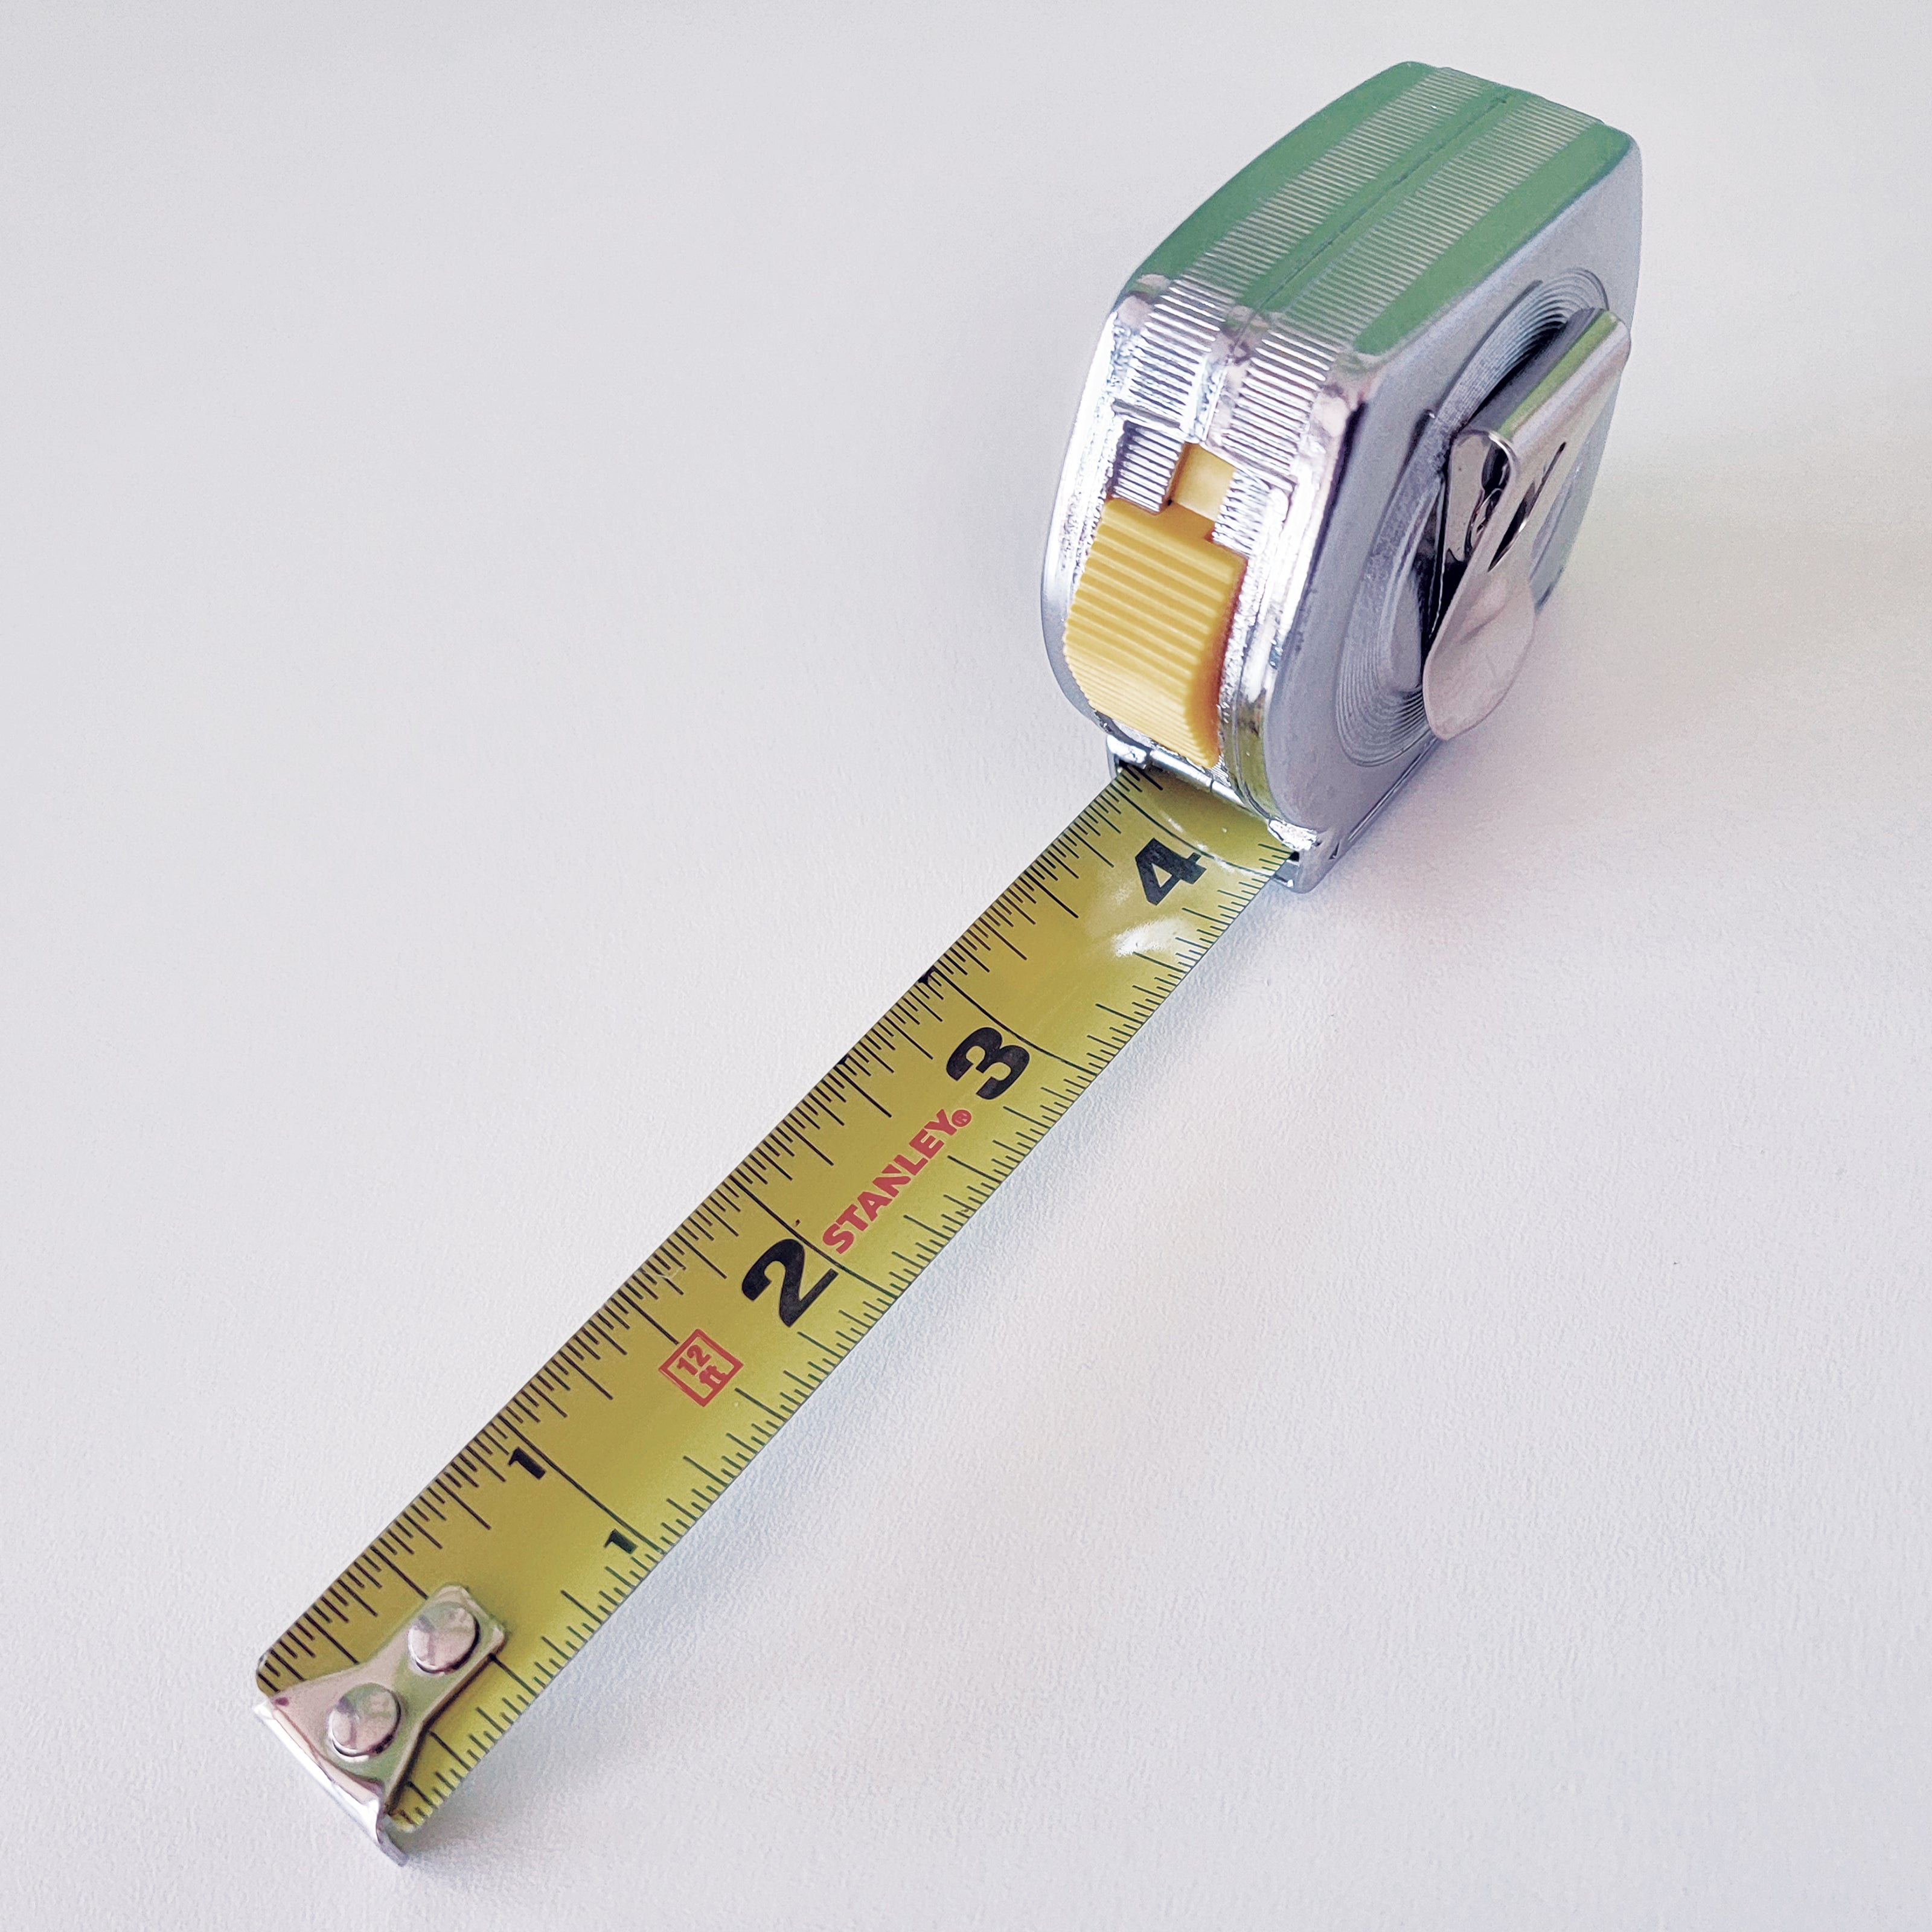 a silver tape measure